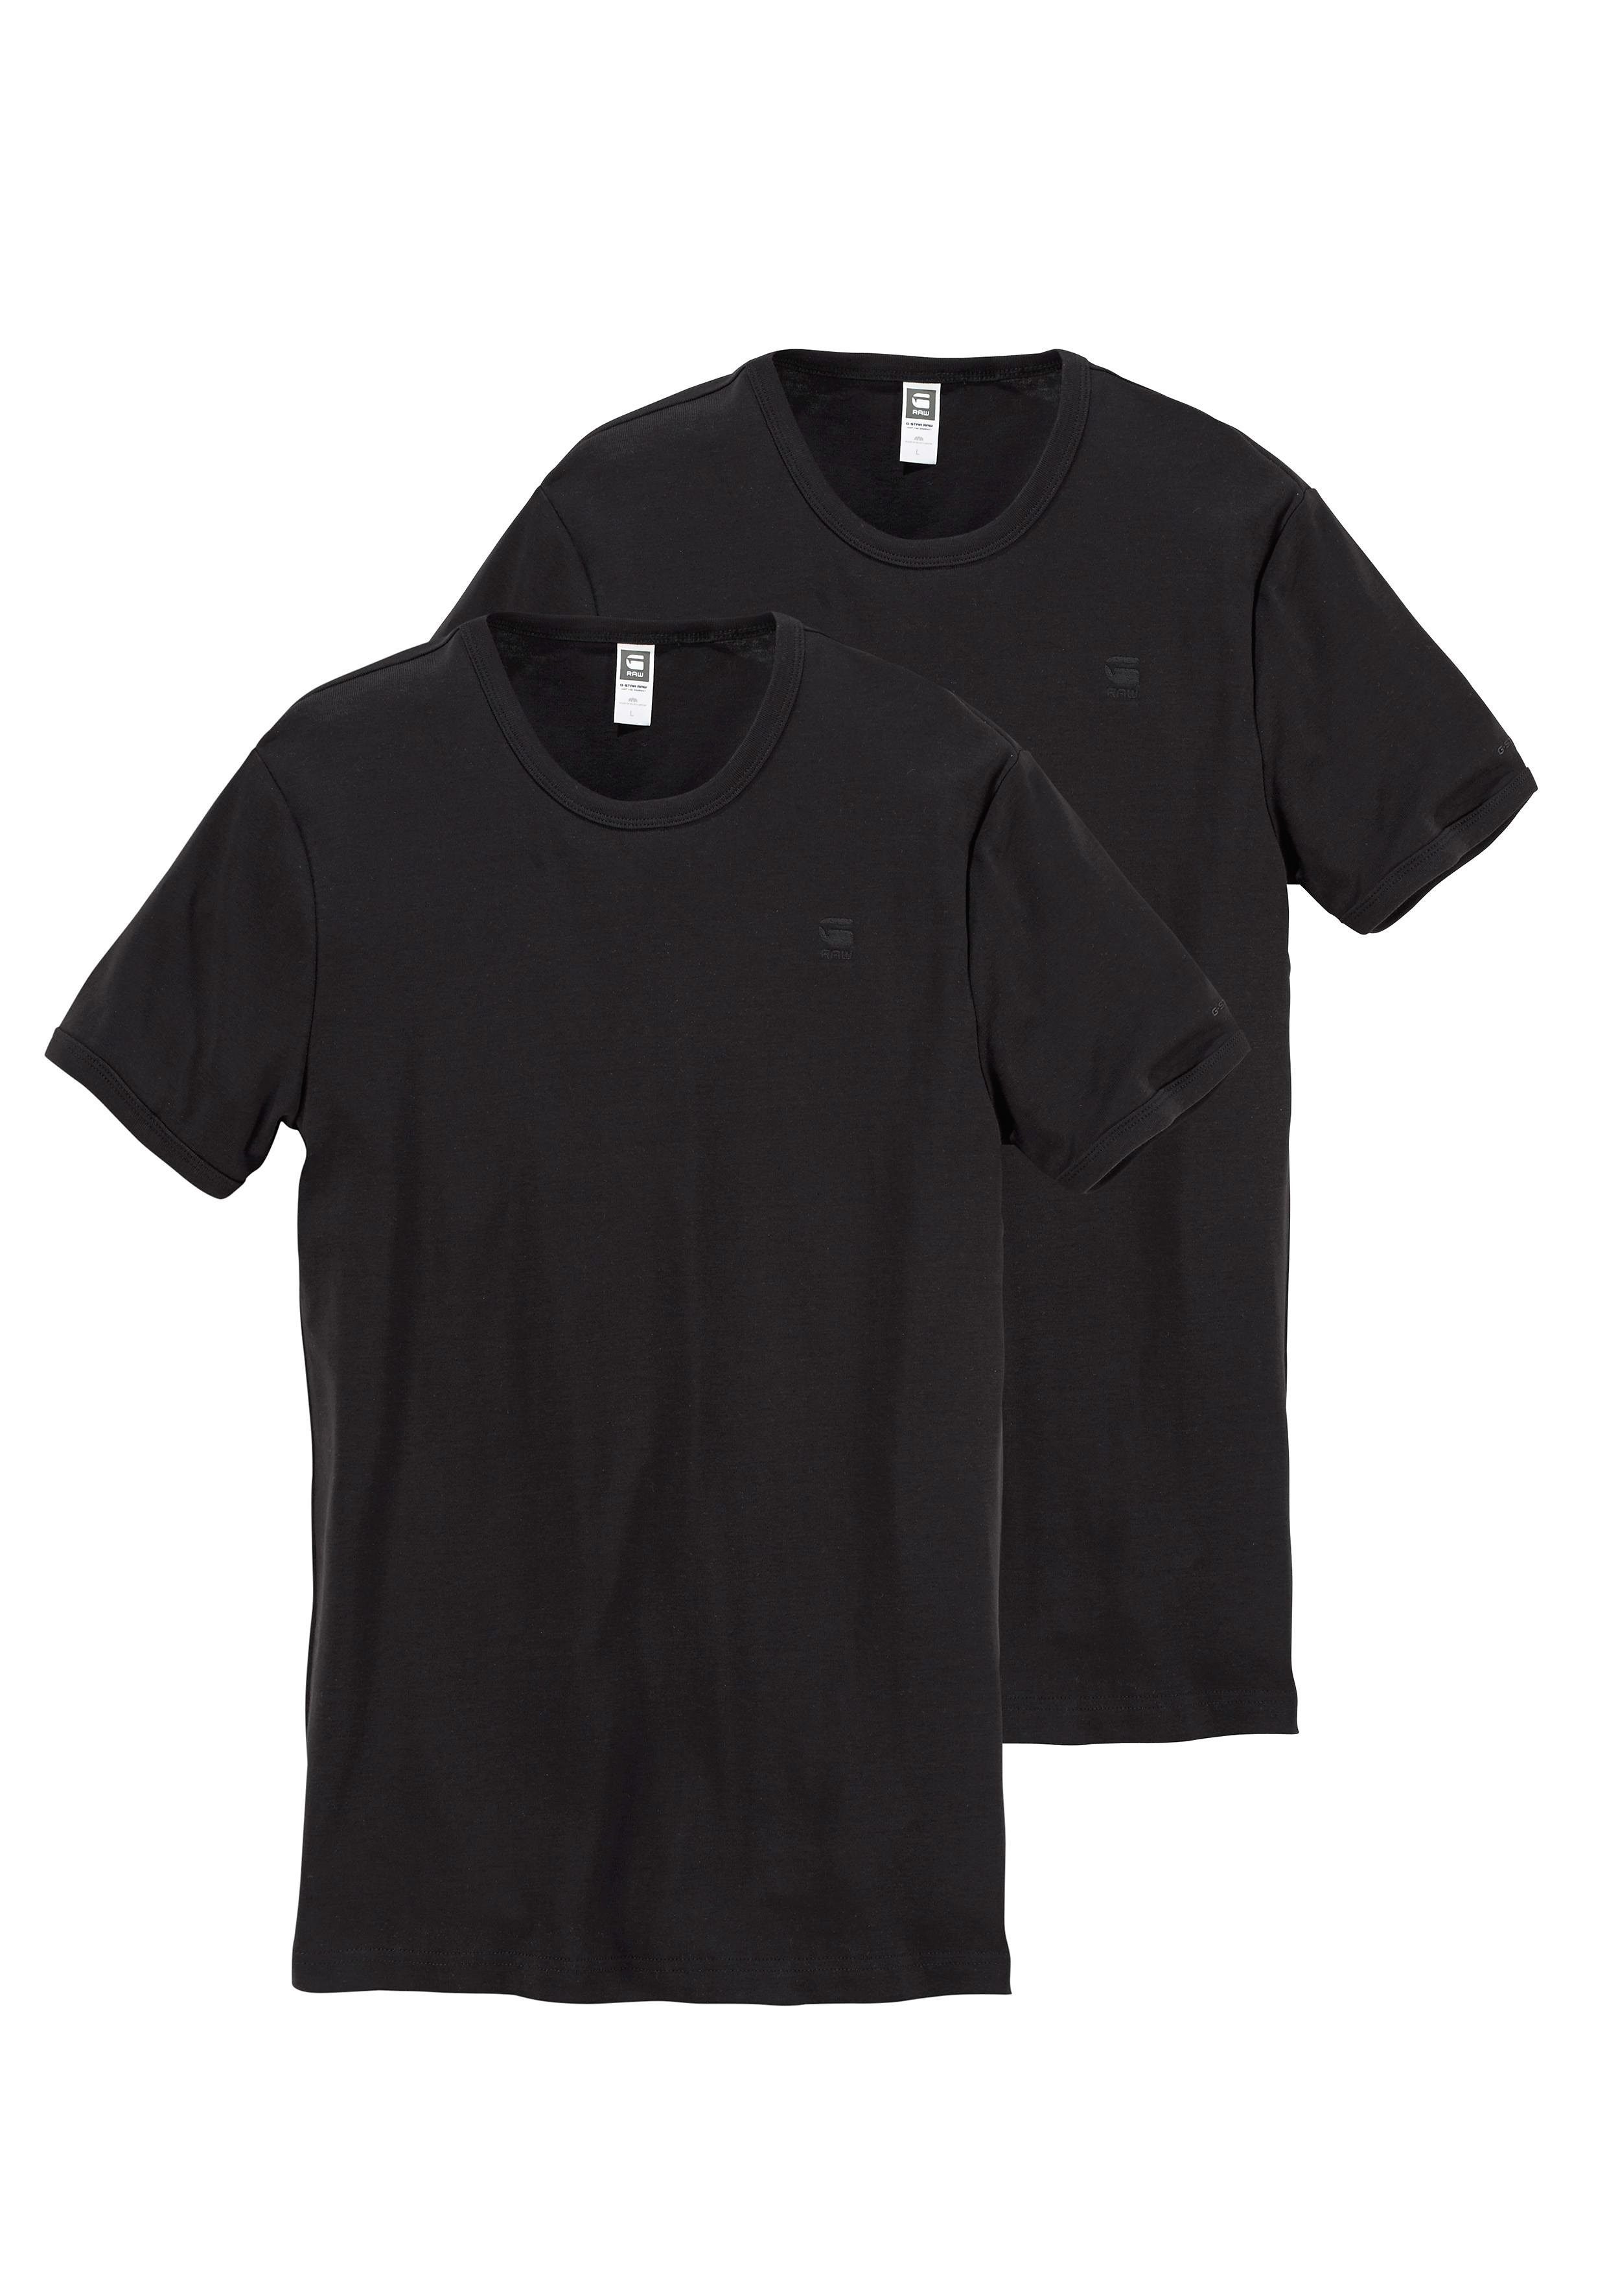 2er-Pack) schwarz T-Shirt (Packung, RAW G-Star